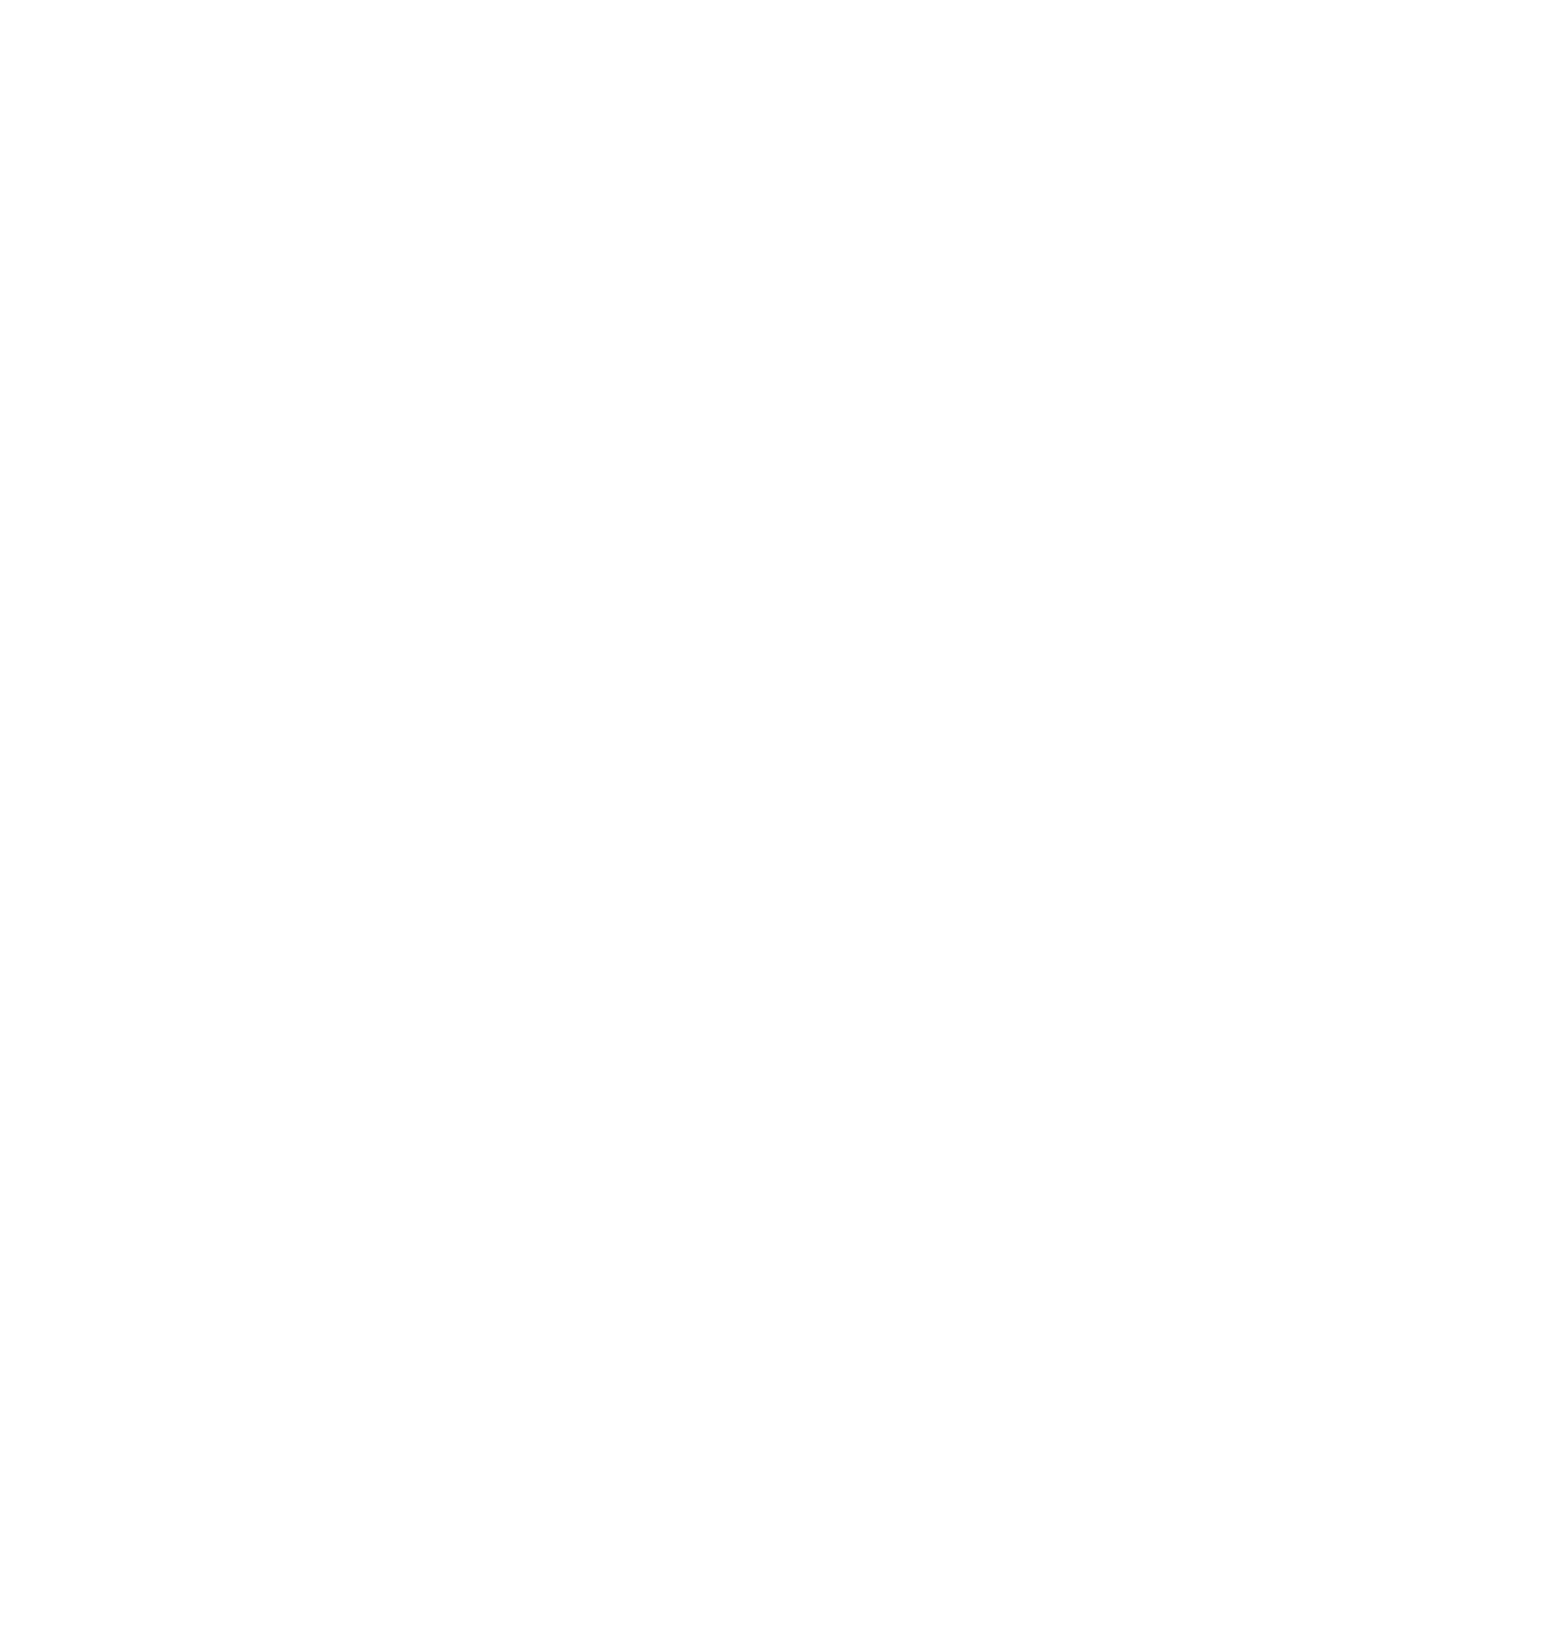 C3 Gunworks white only logos 01